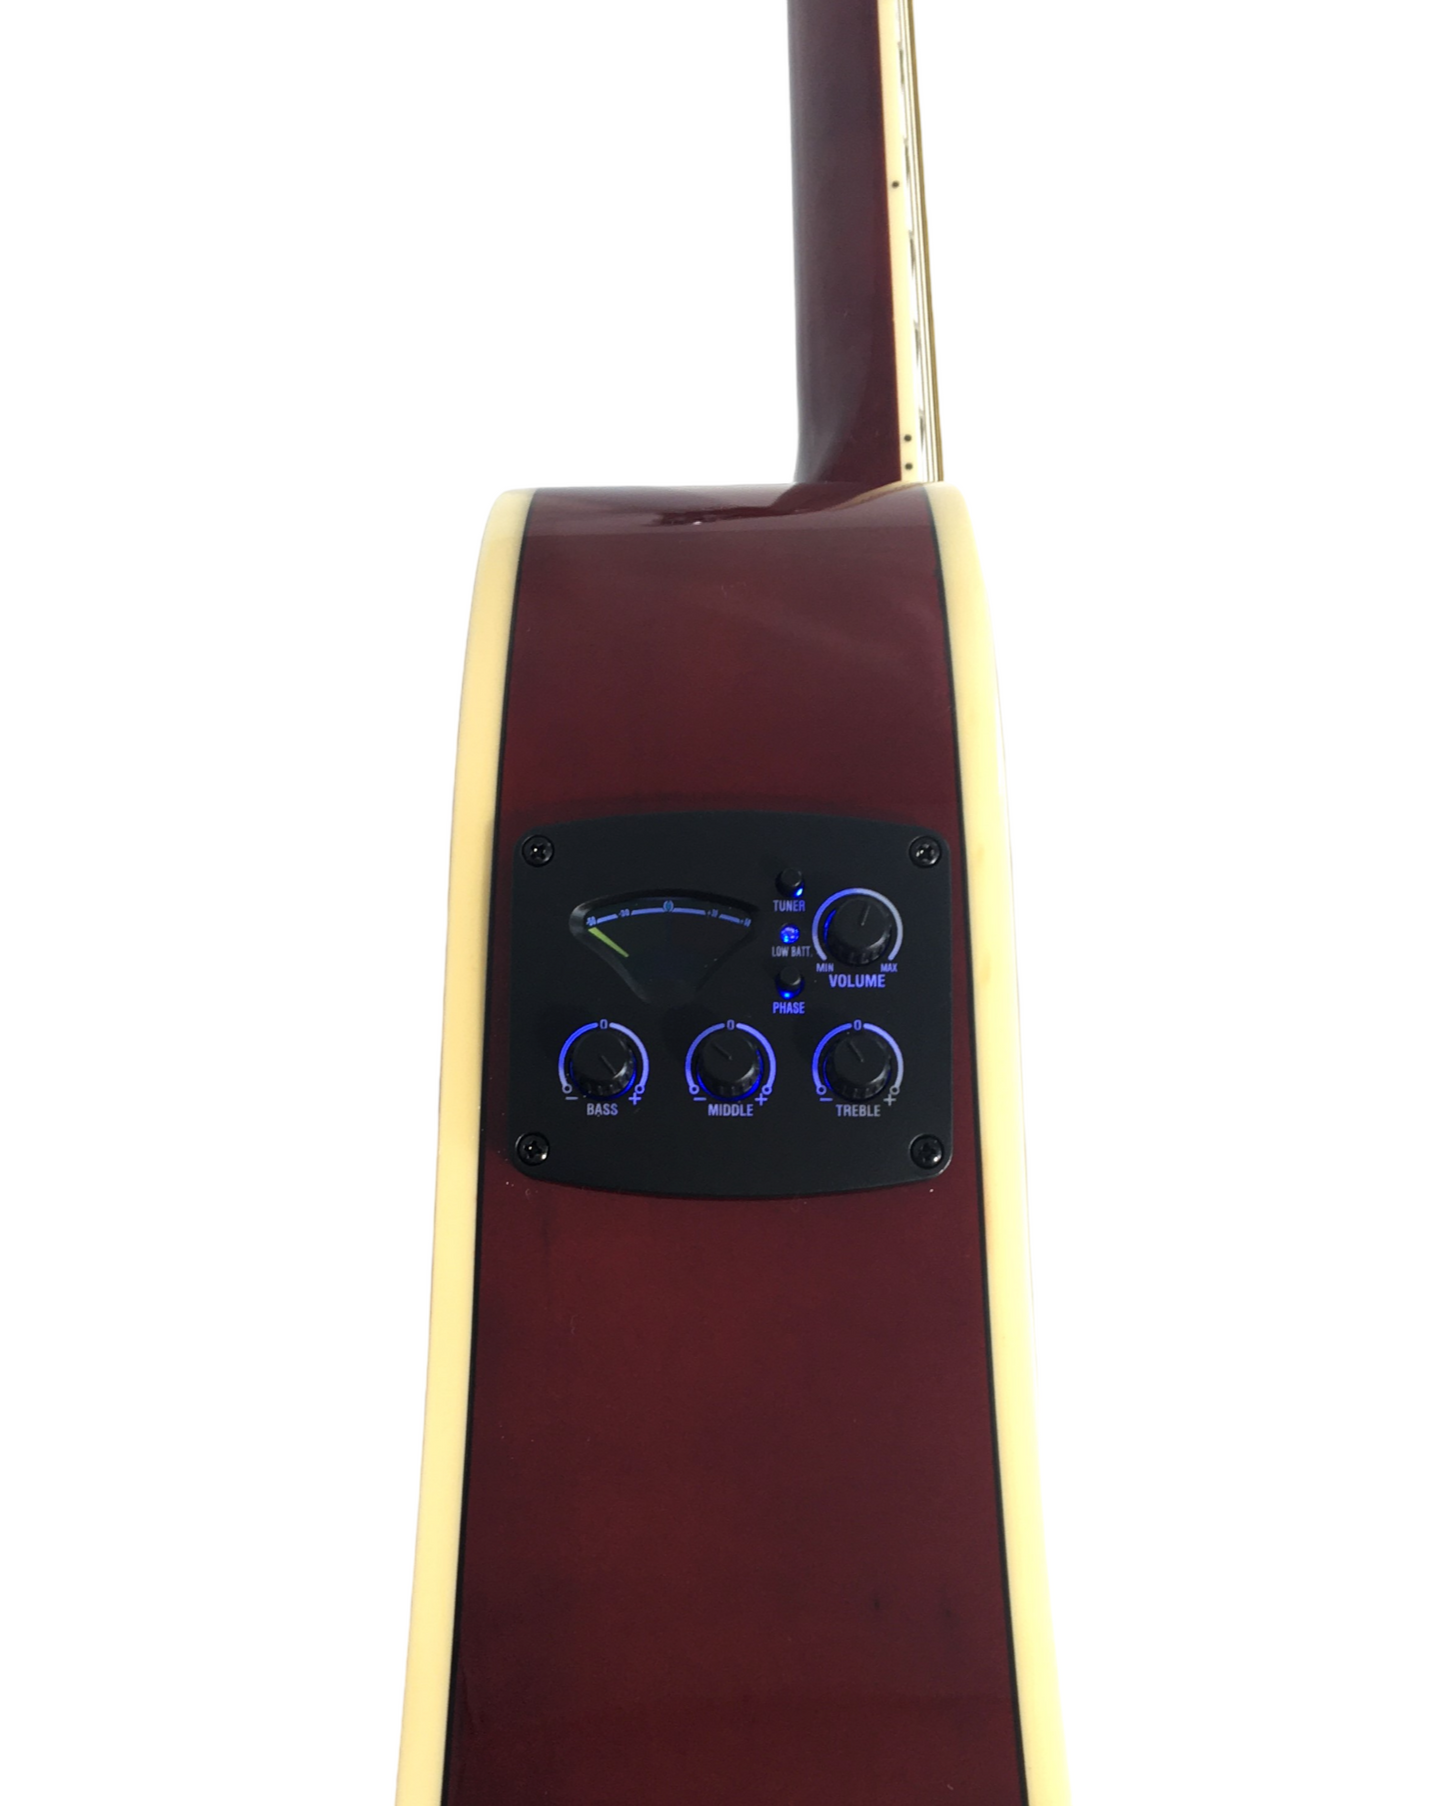 Haze Thin-Body Built-In Pickups/Tuner Acoustic Guitar - Sunburst F631BCEQBS